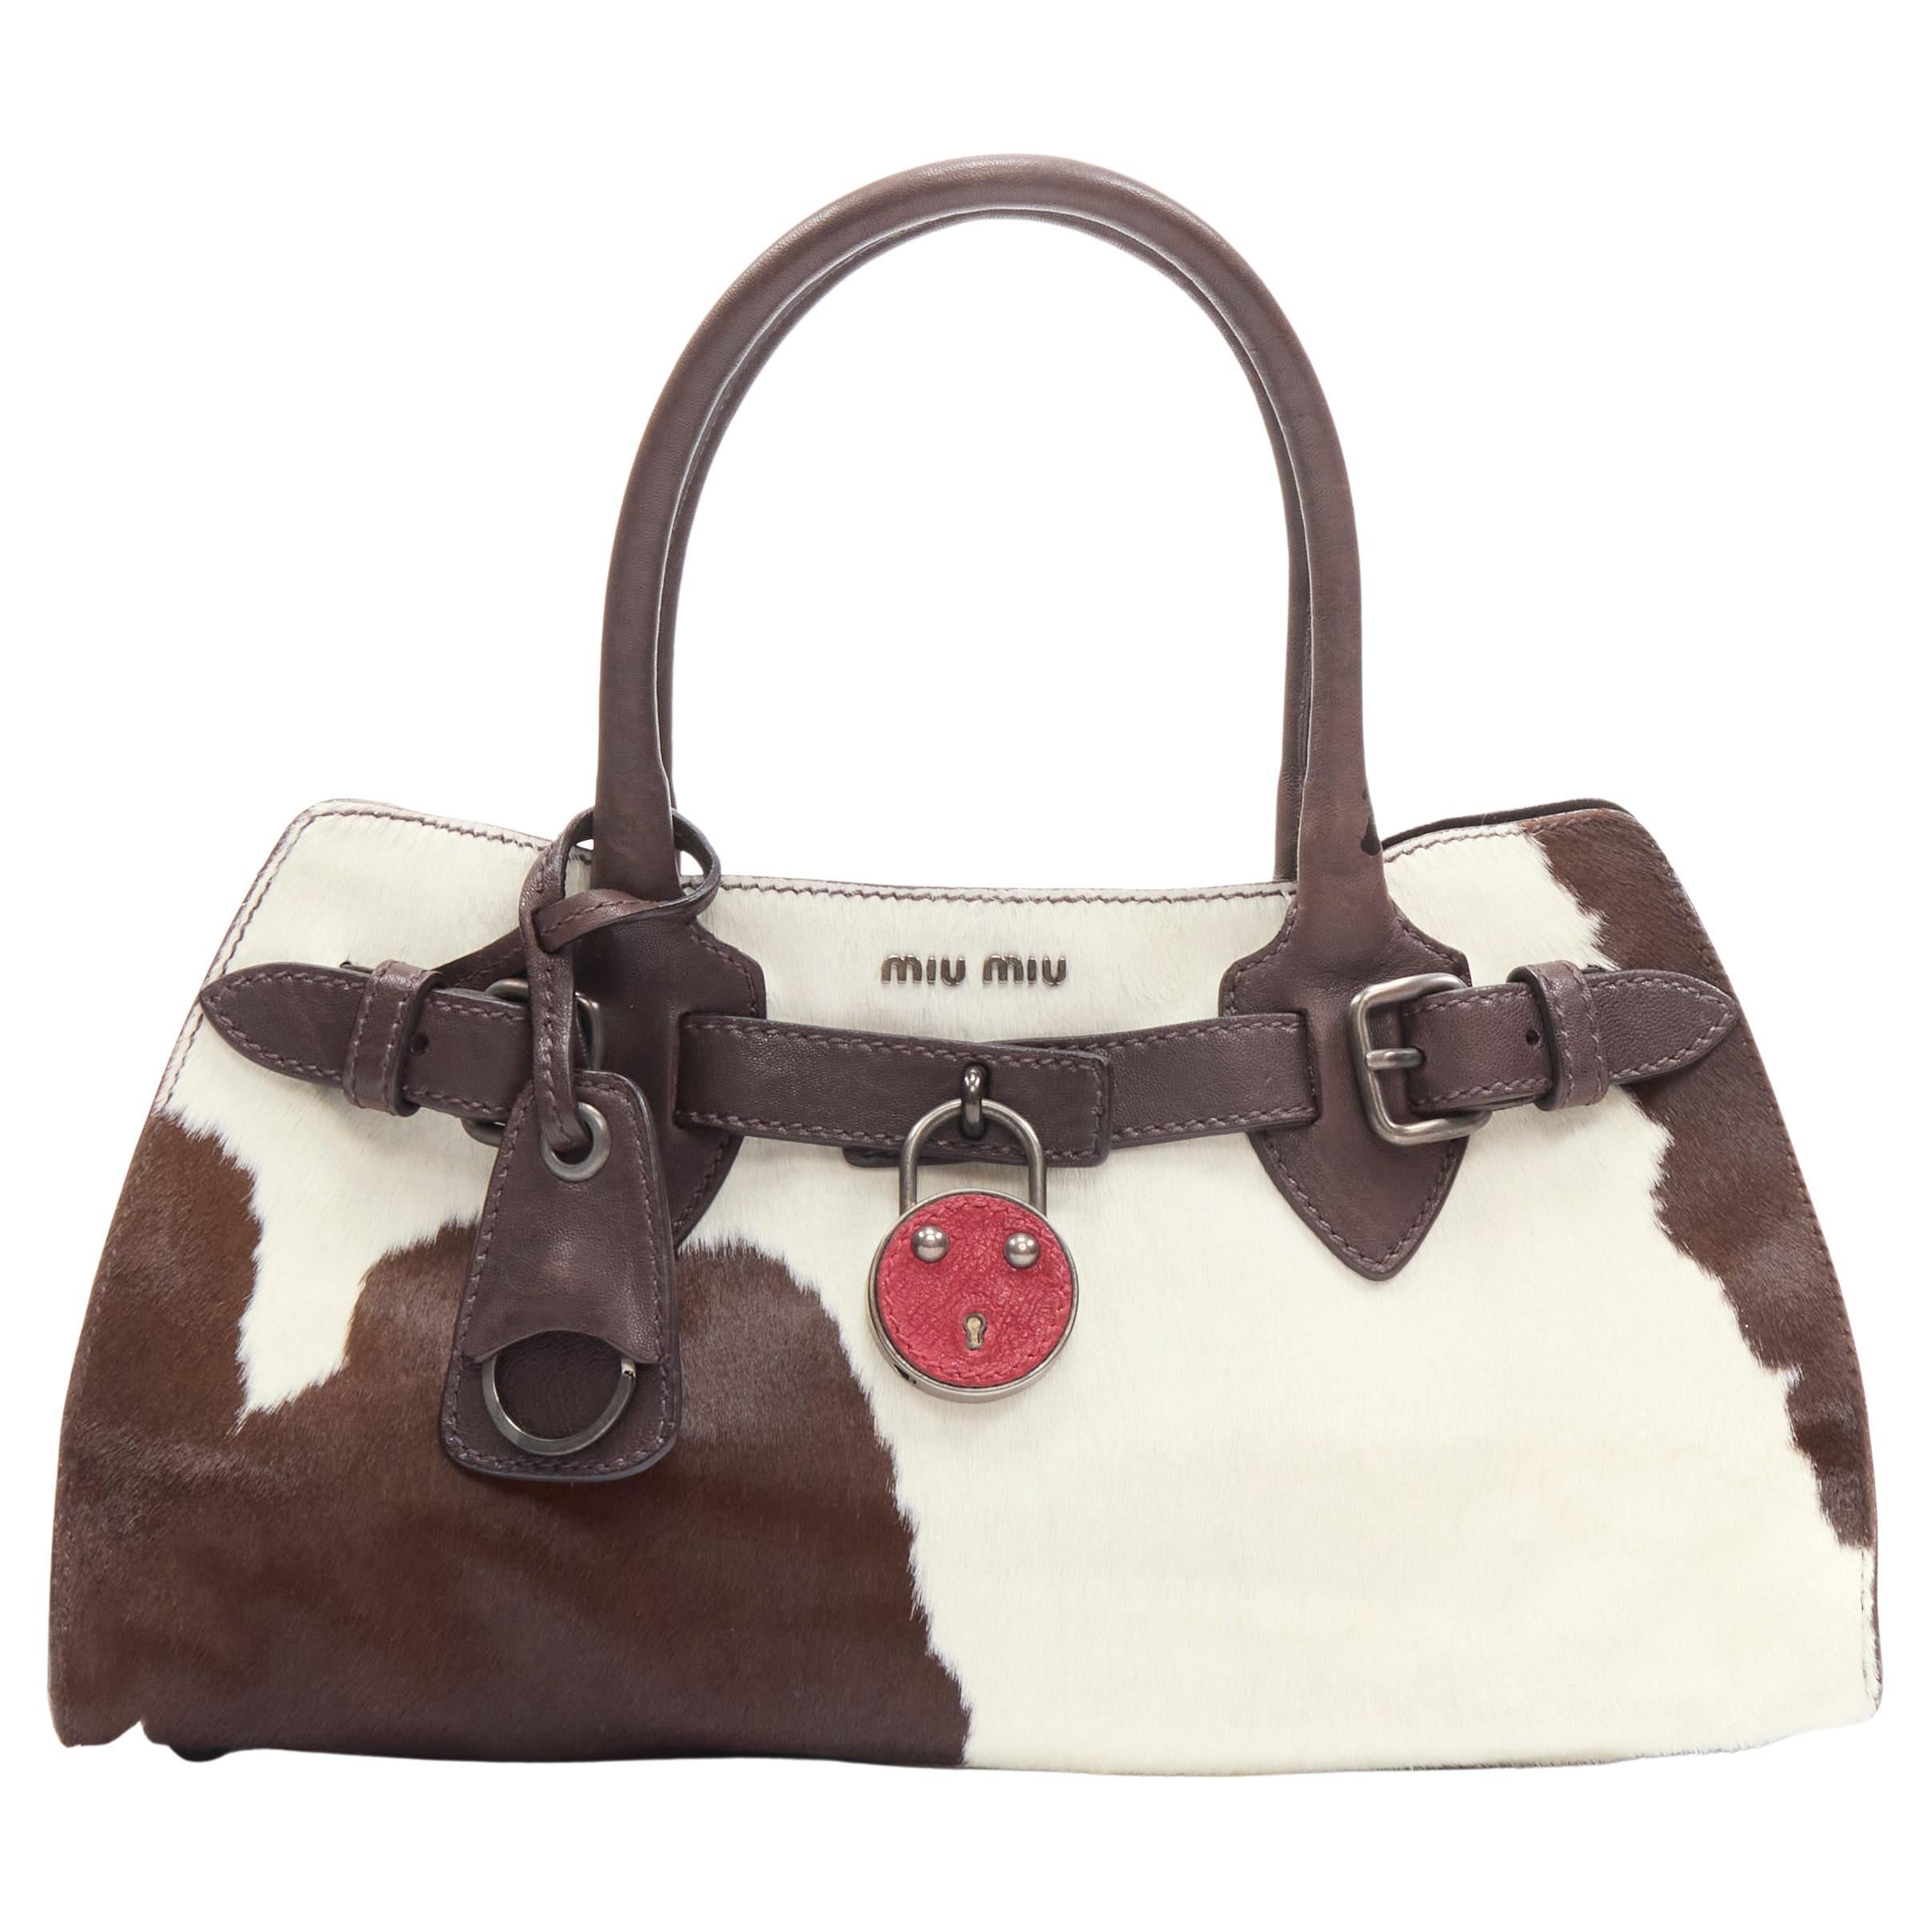 Sold at Auction: Vintage Miu Miu Shoulder Bag, Brown Leather with